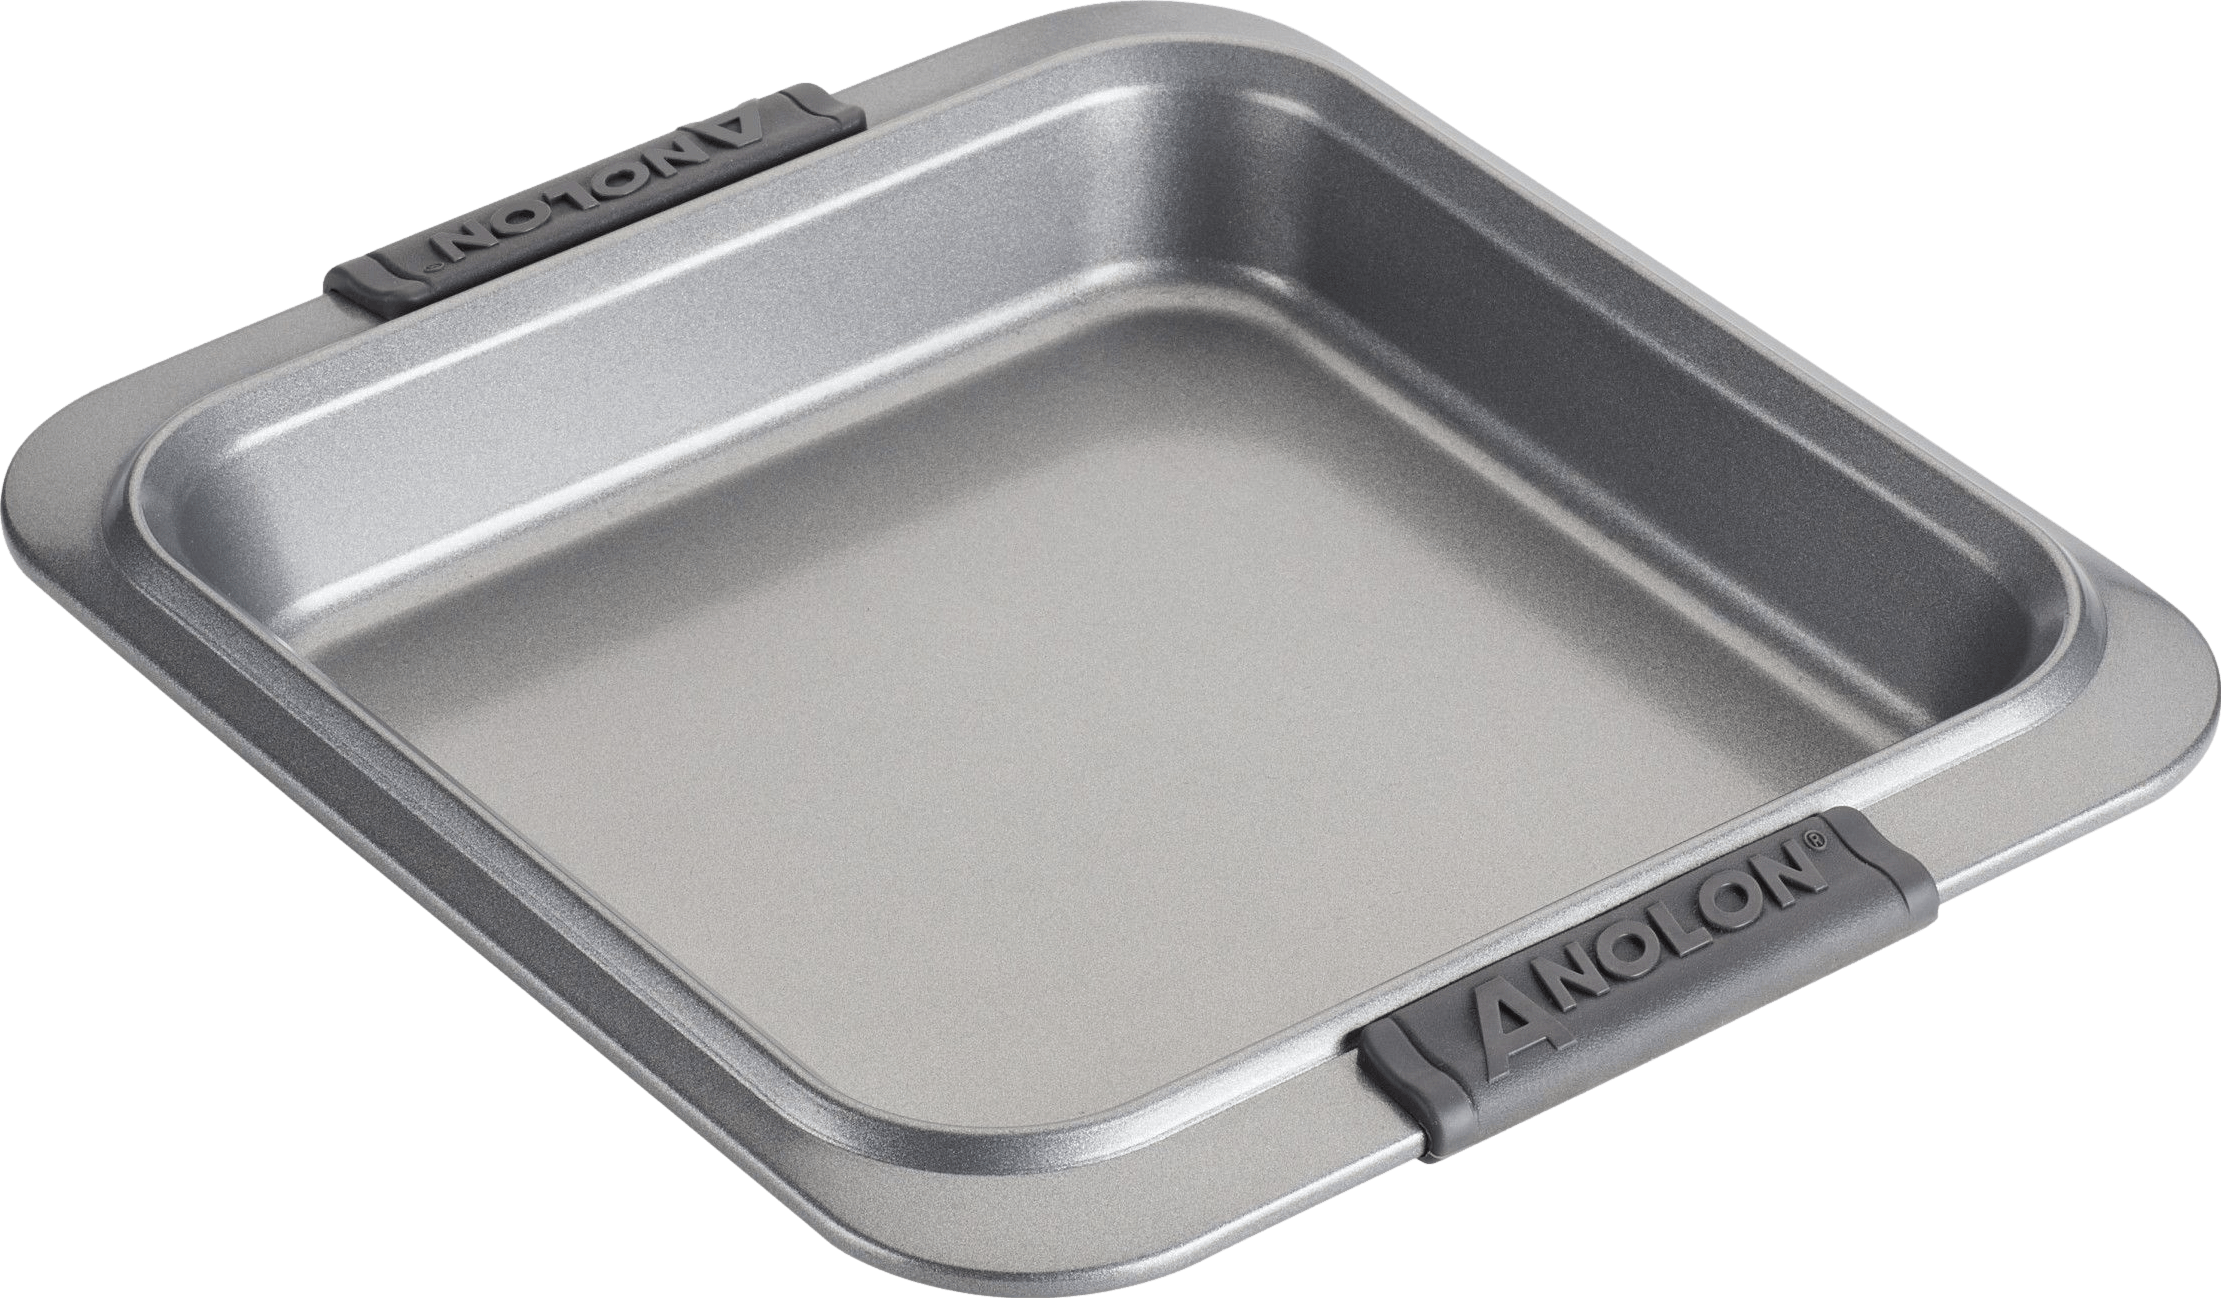 Anolon 9-In. Nonstick Advanced Bakeware Springform Pan